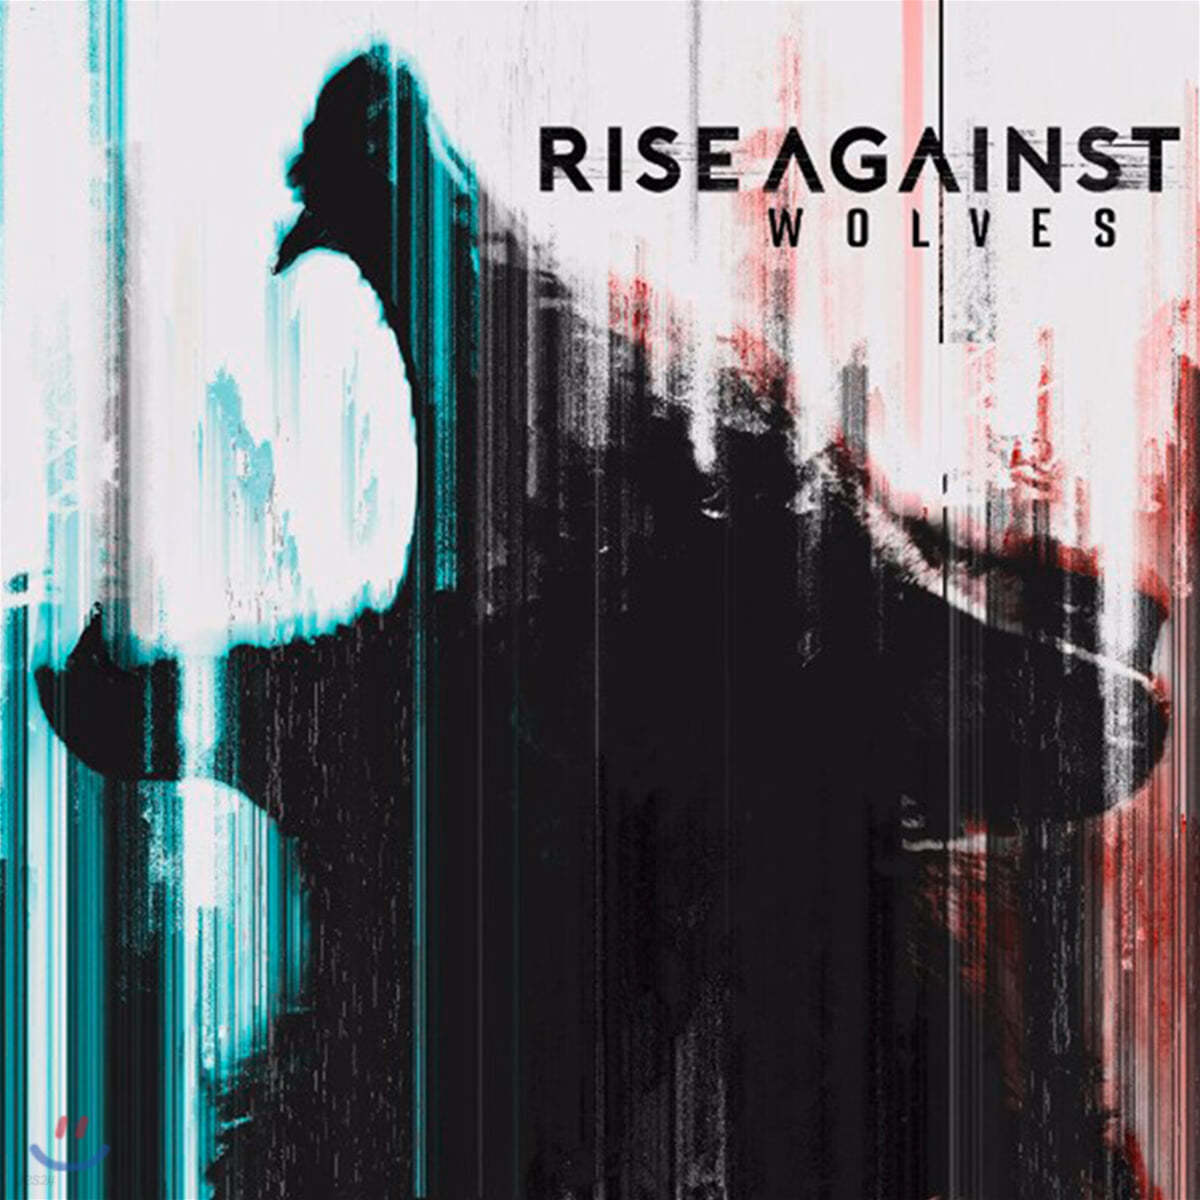 Rise Against (라이즈 어게인스트) - Wolves